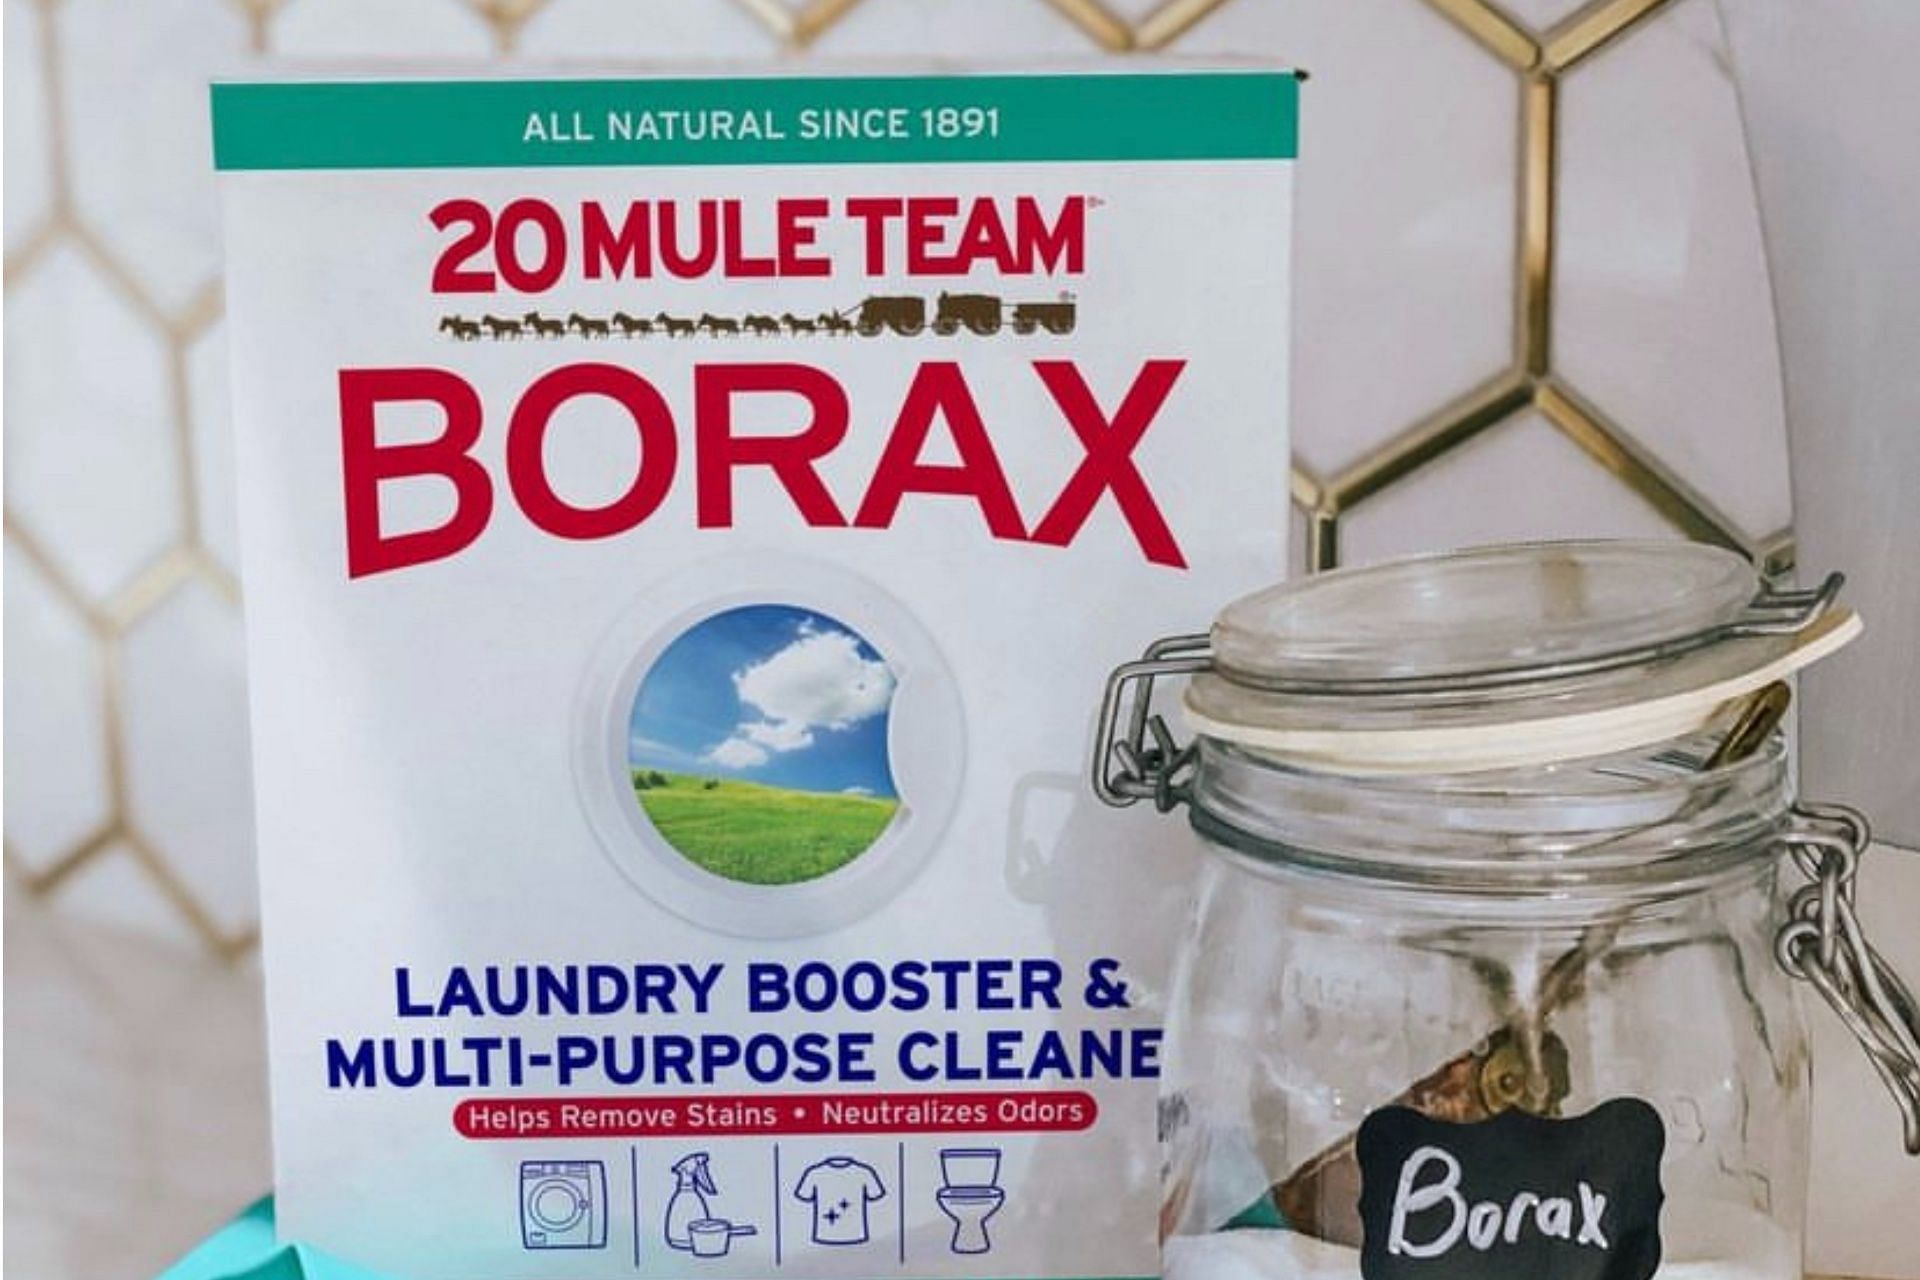 TikTok's Borax Challenge Has People Drinking Laundry Detergent